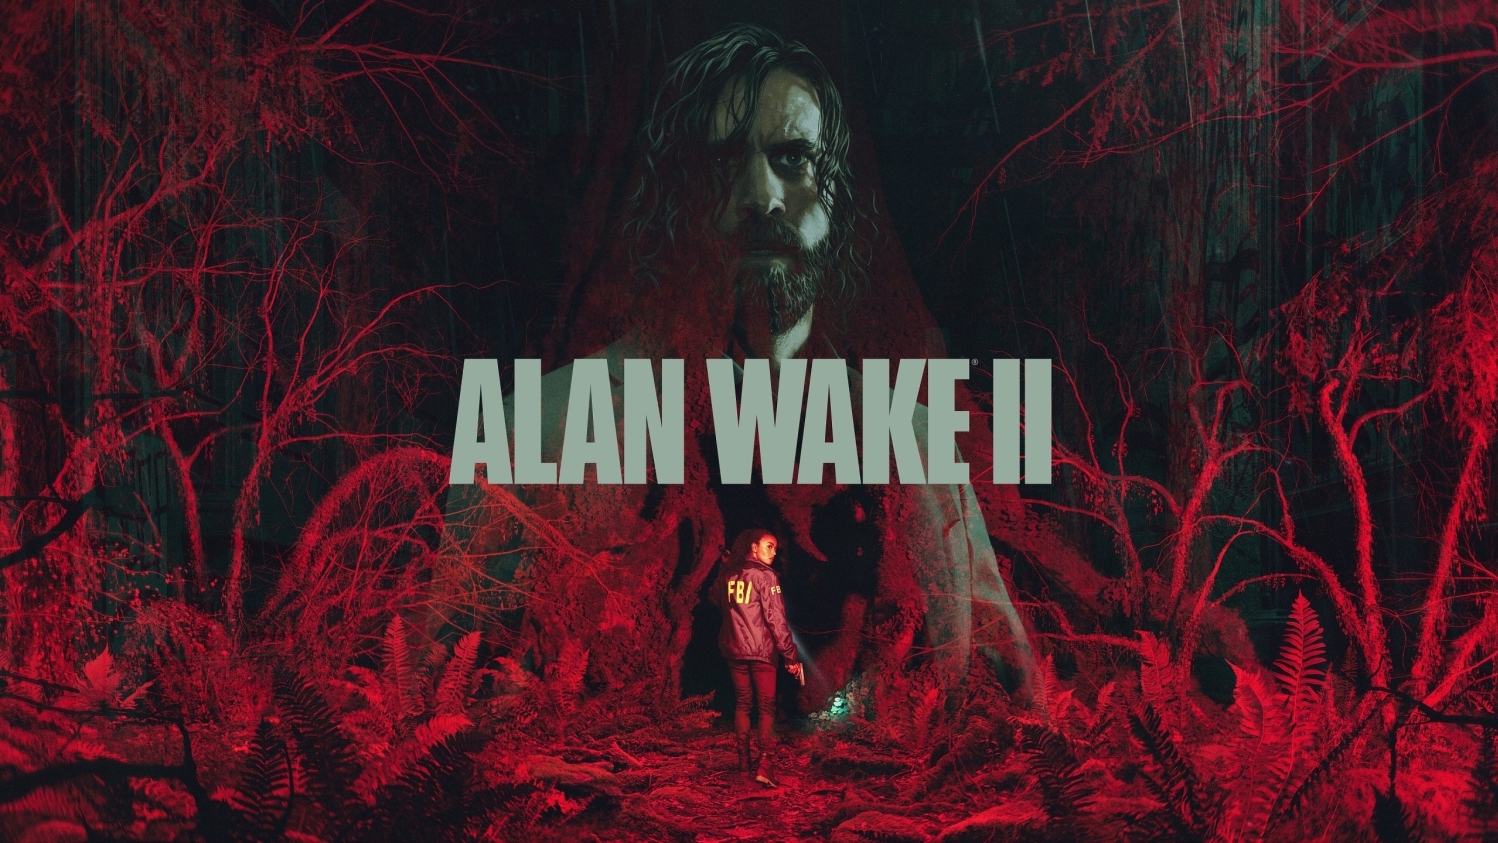 Alan Wake Remastered comparison shows off Xbox Series X visuals